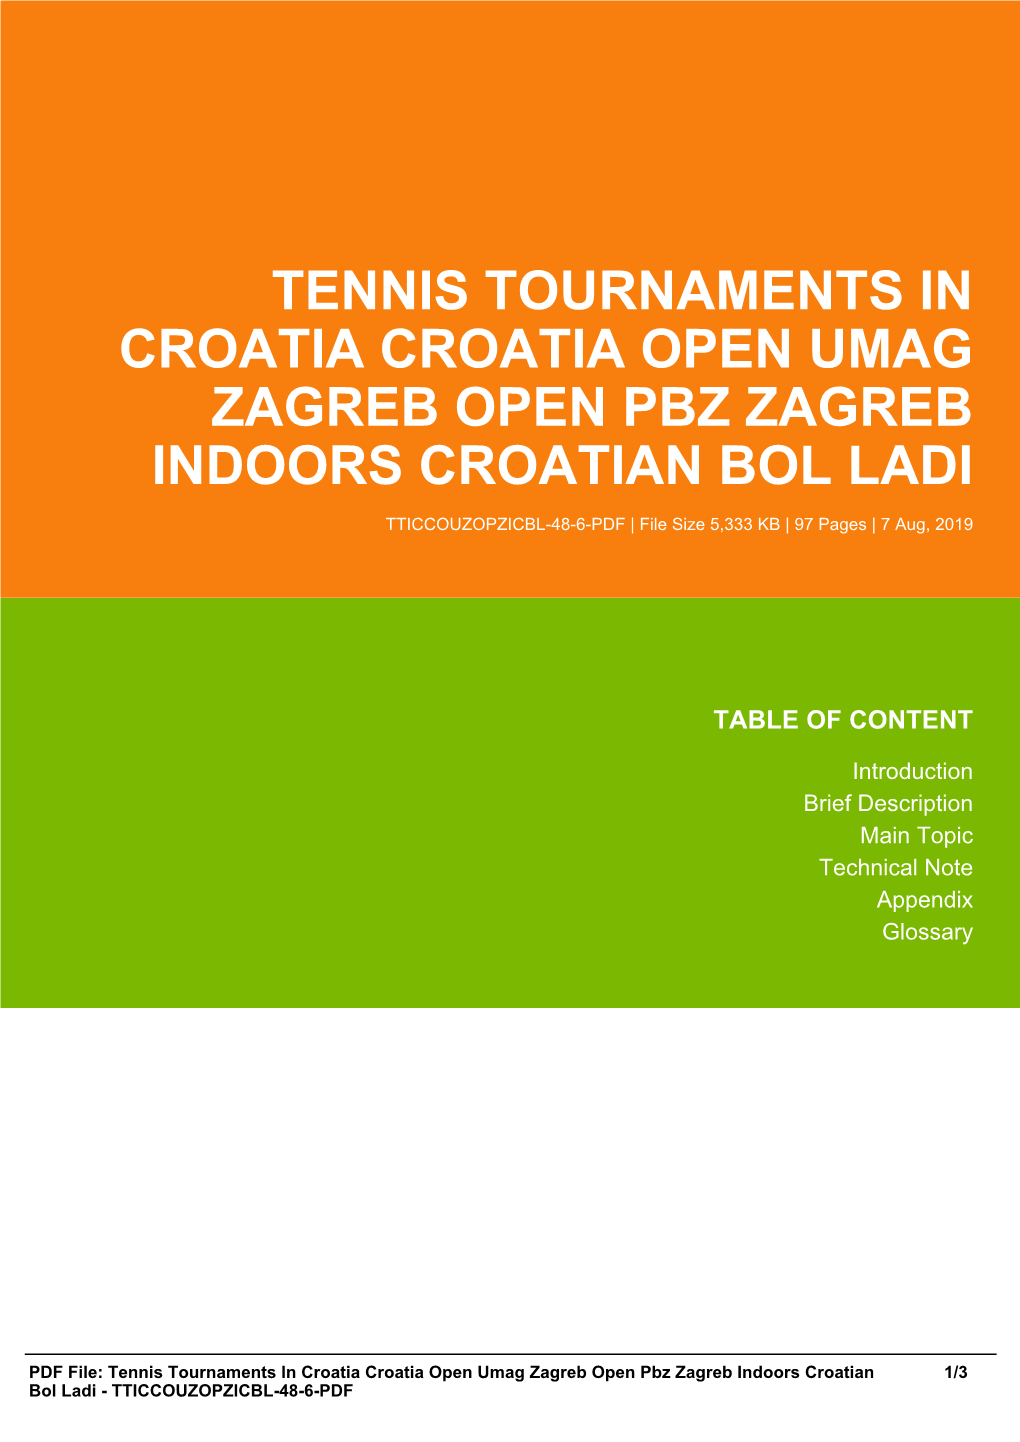 Tennis Tournaments in Croatia Croatia Open Umag Zagreb Open Pbz Zagreb Indoors Croatian Bol Ladi